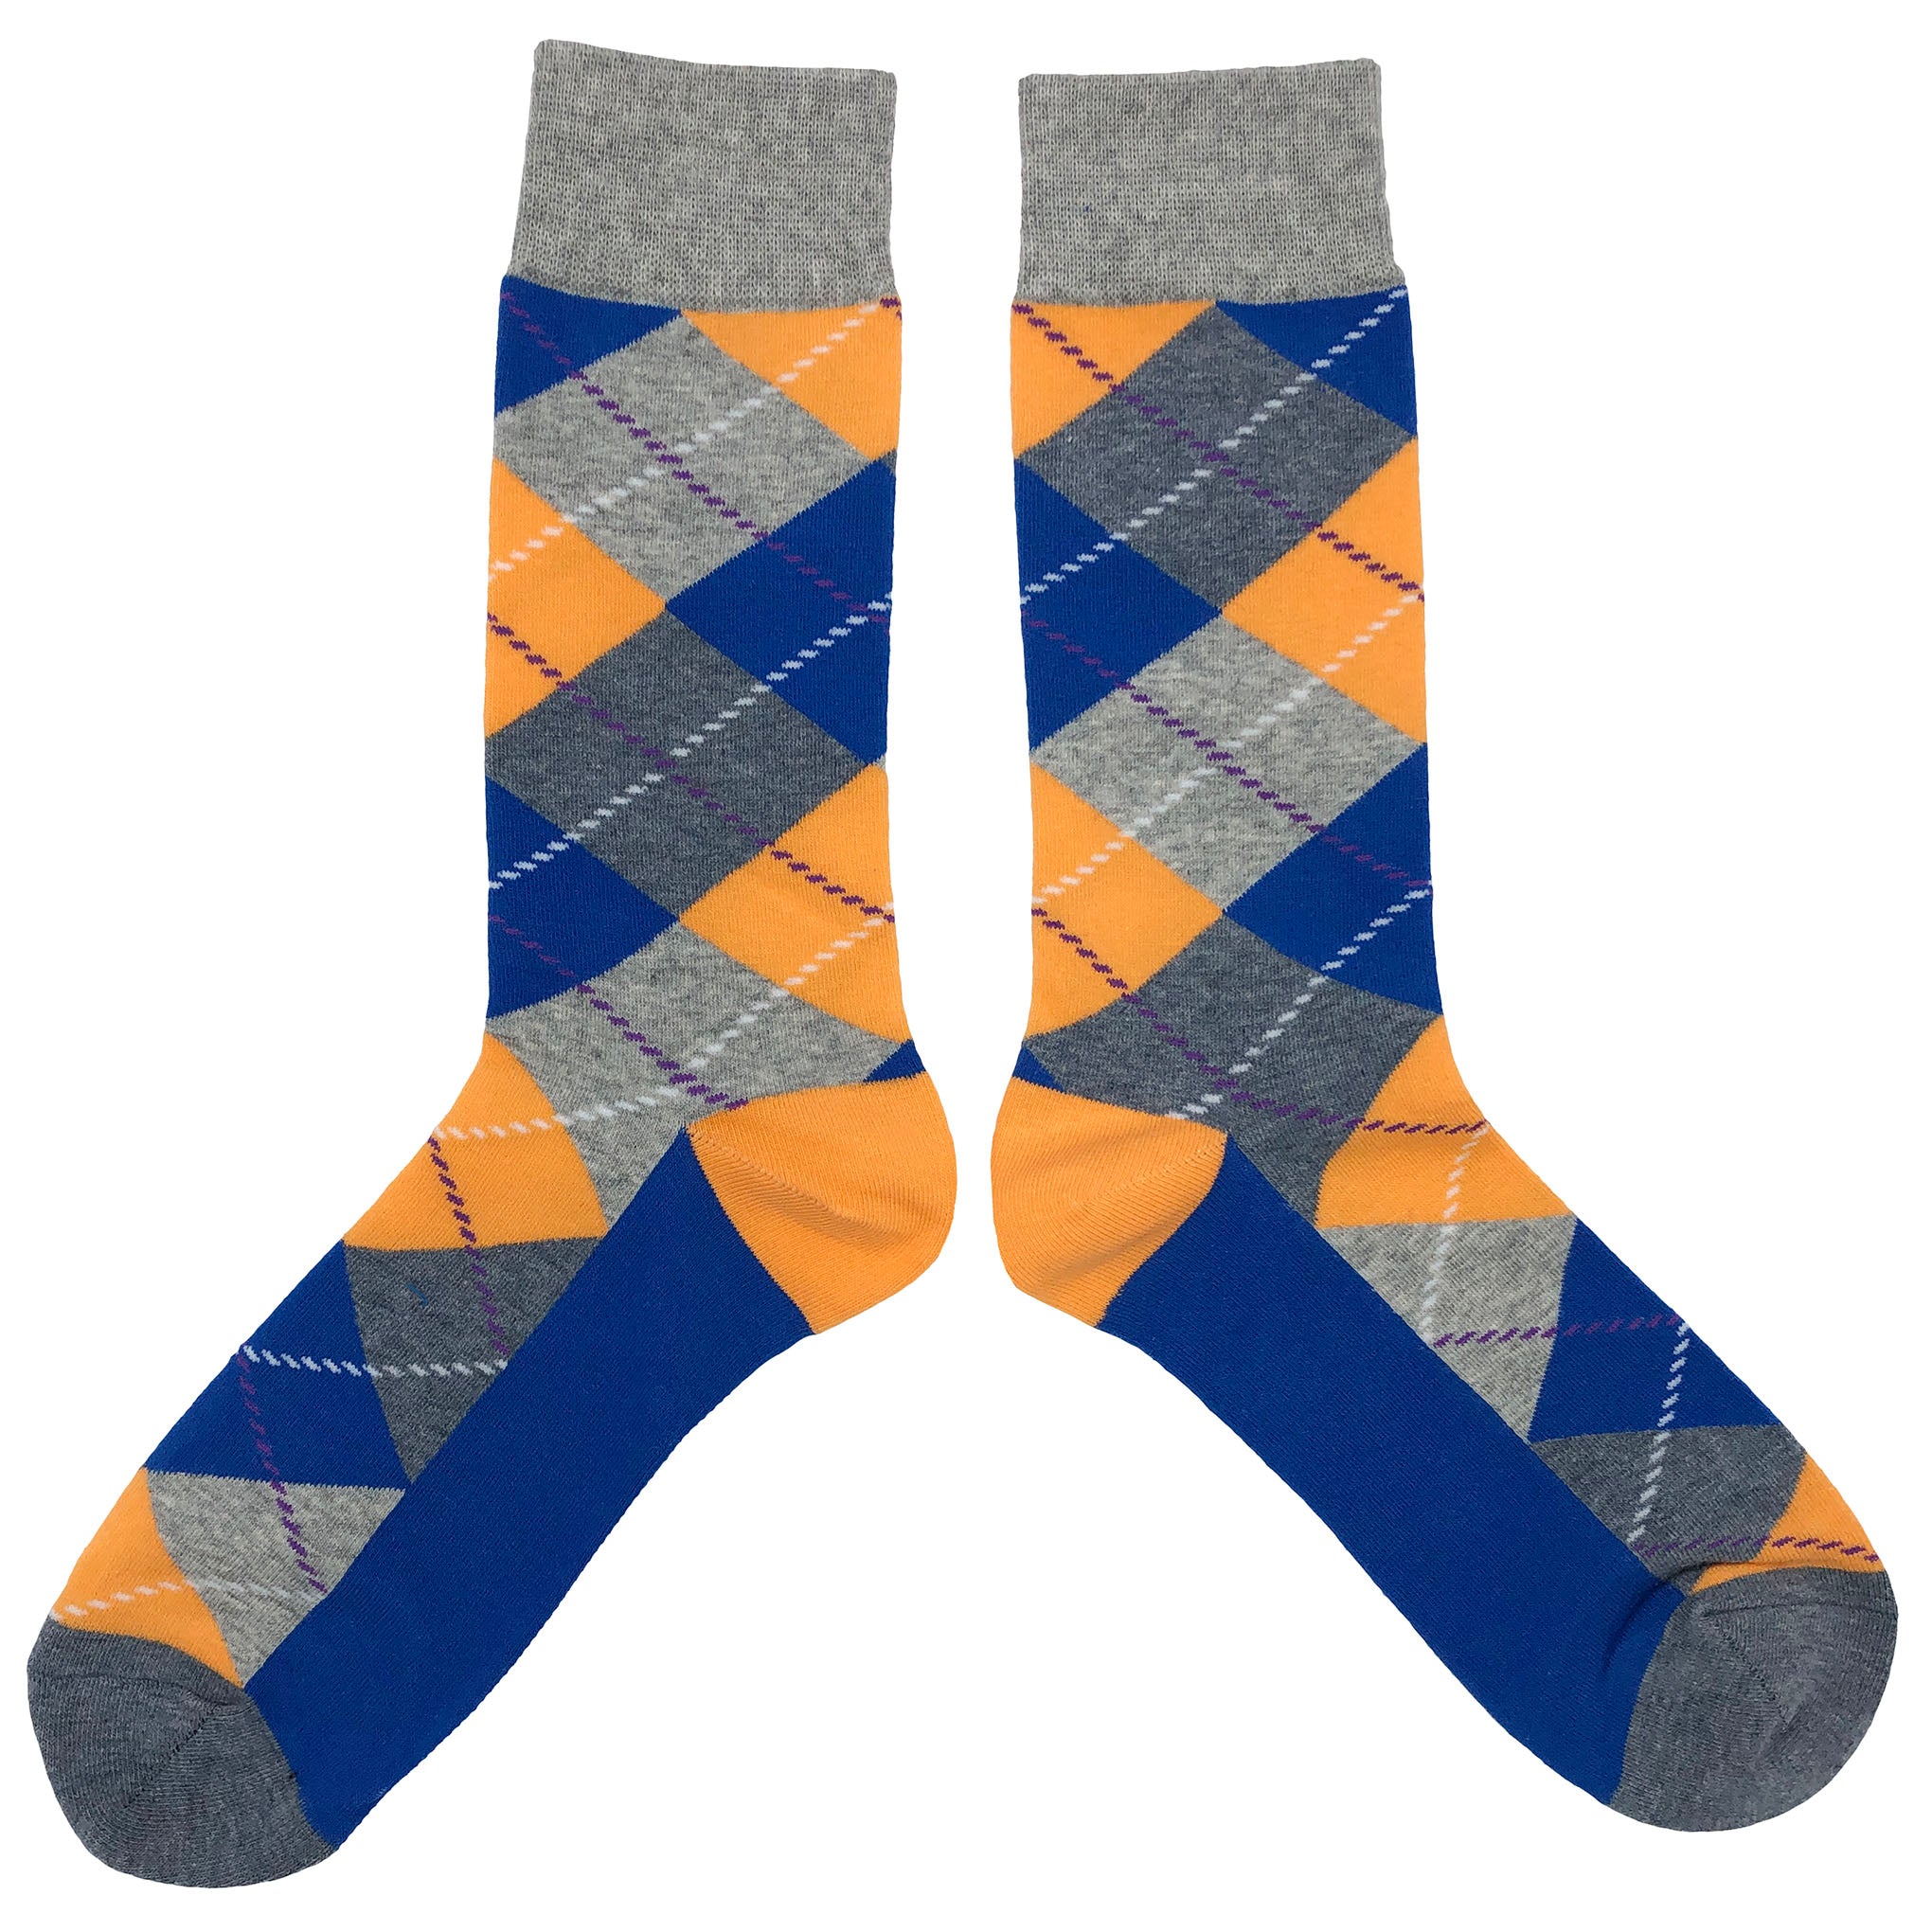 Anytime Argyle Socks - Fun and Crazy Socks at Sockfly.com